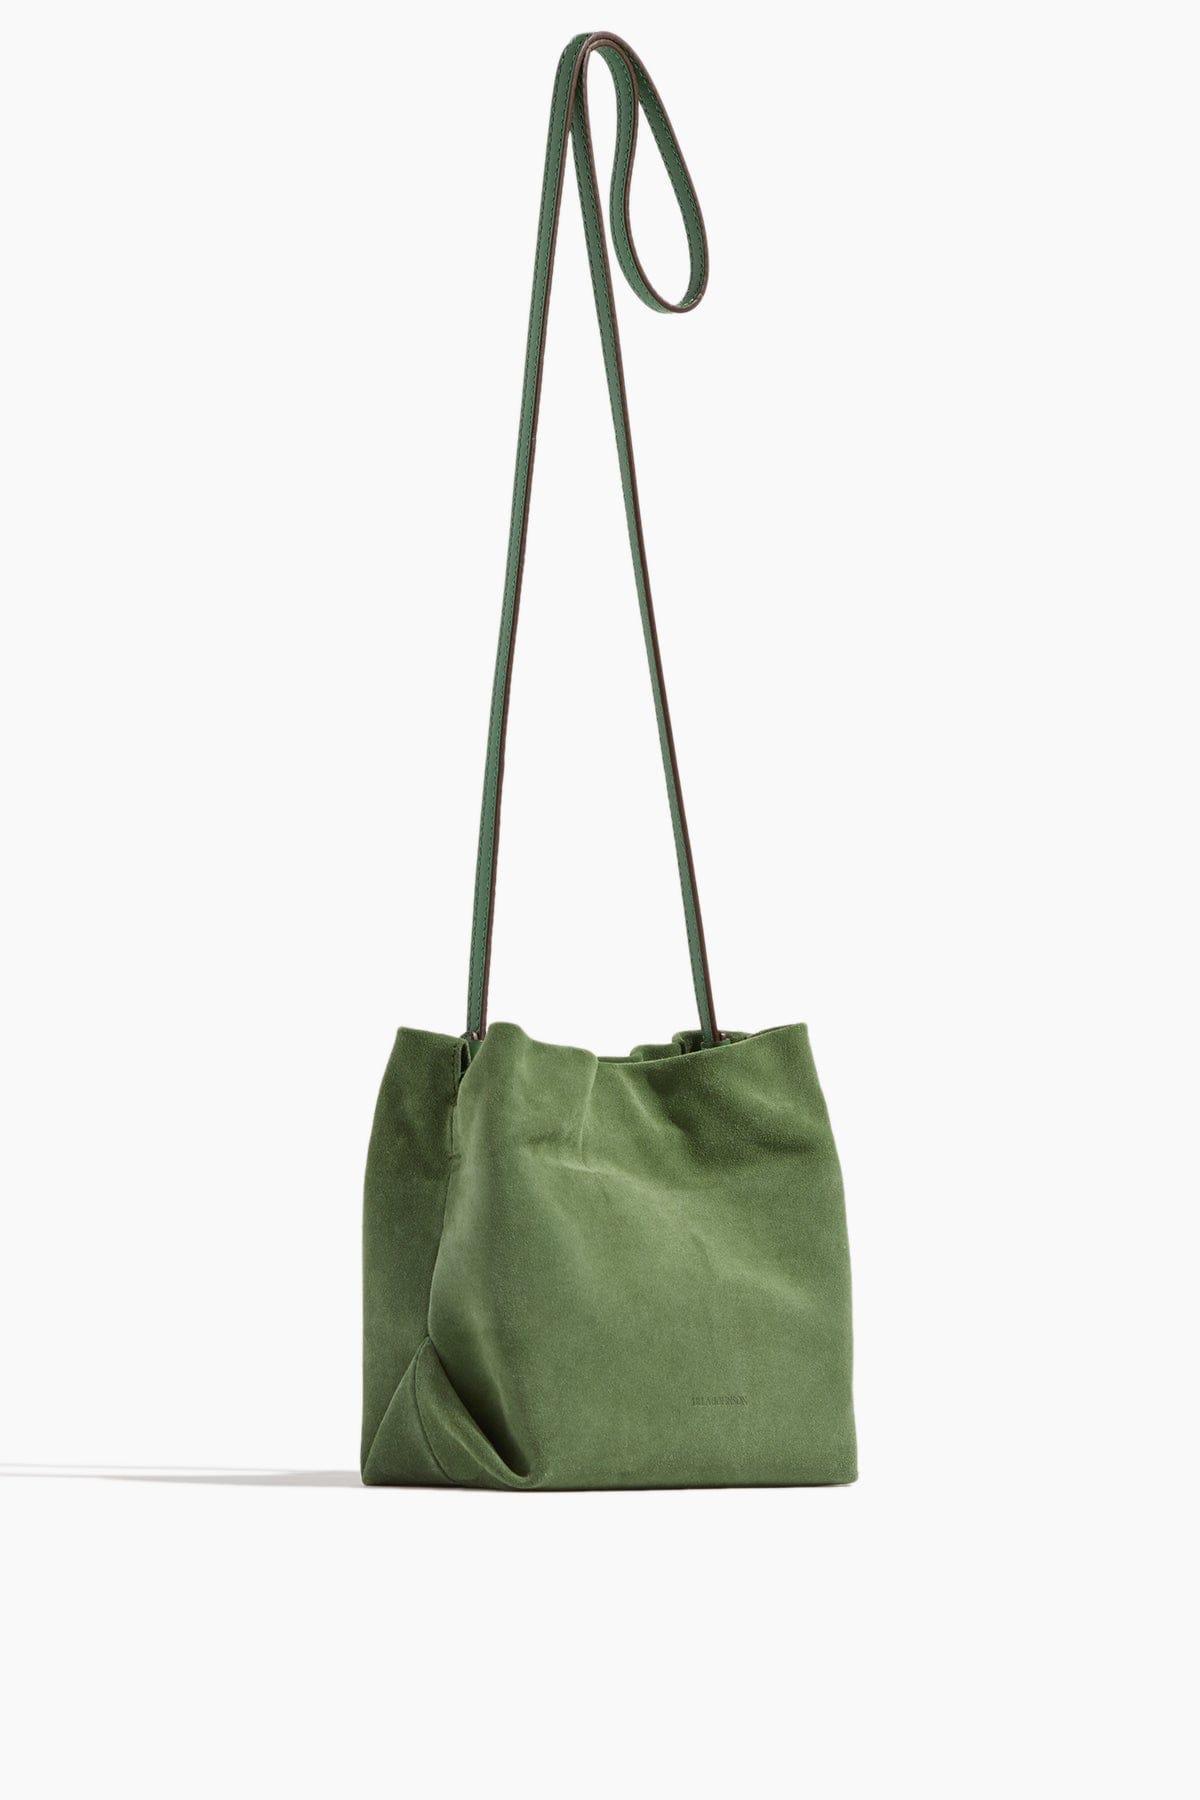 Ulla Johnson Women's Remy Mini Handbag in Green